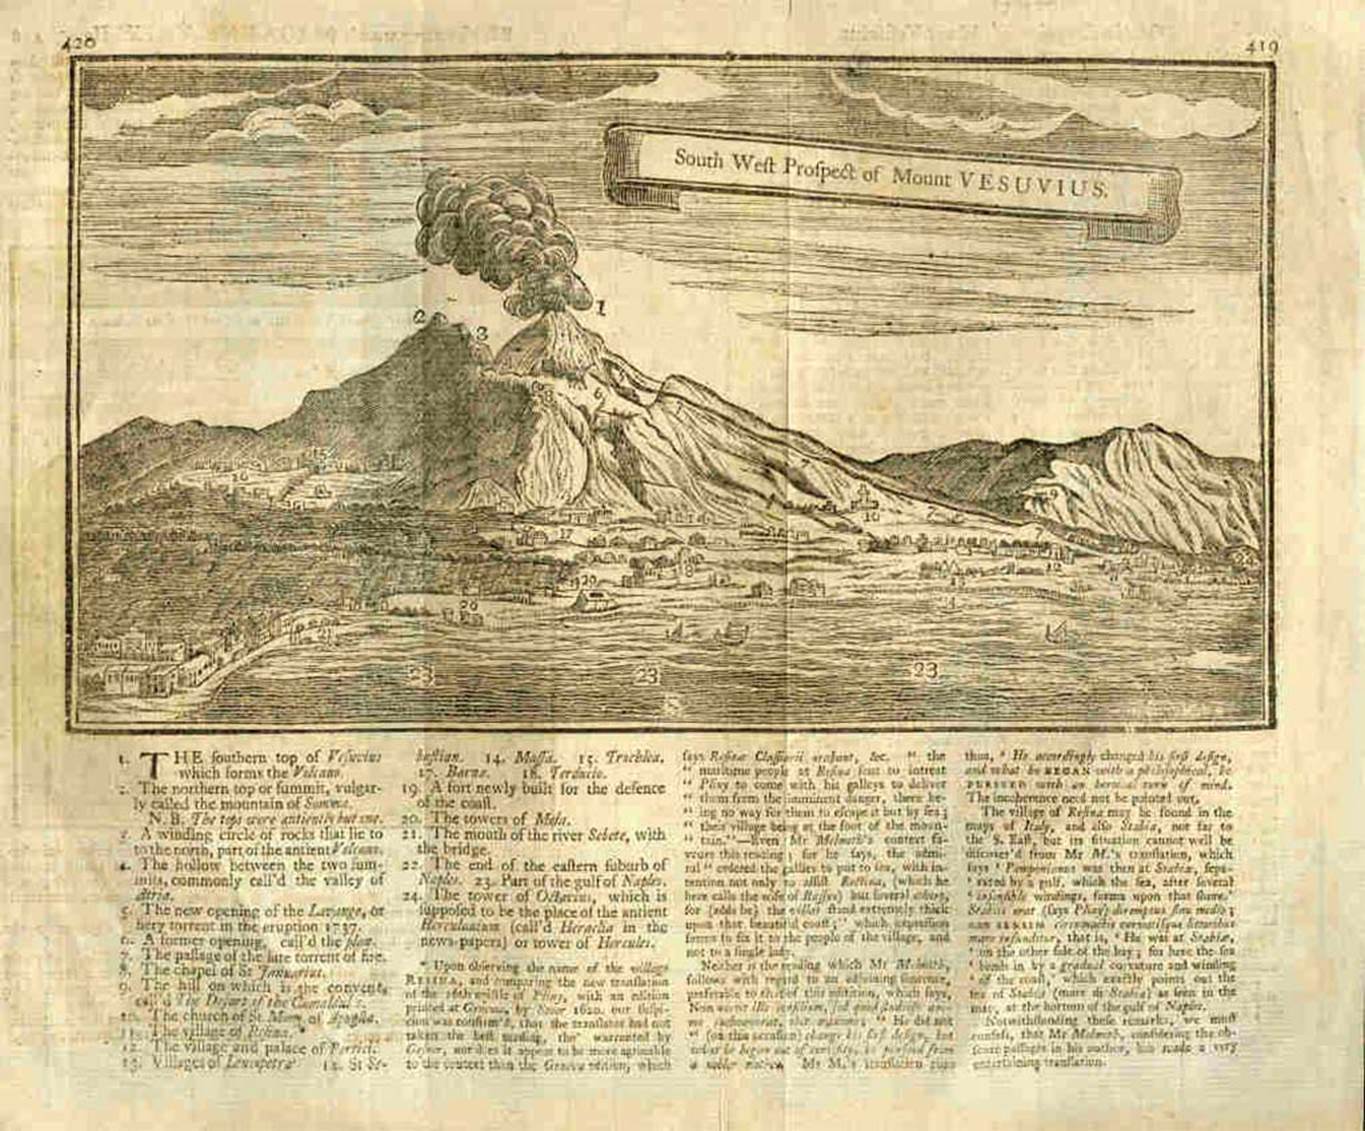 Vesuvius 1747 from The Gentleman's Magazine September 1747 p. 419-420.